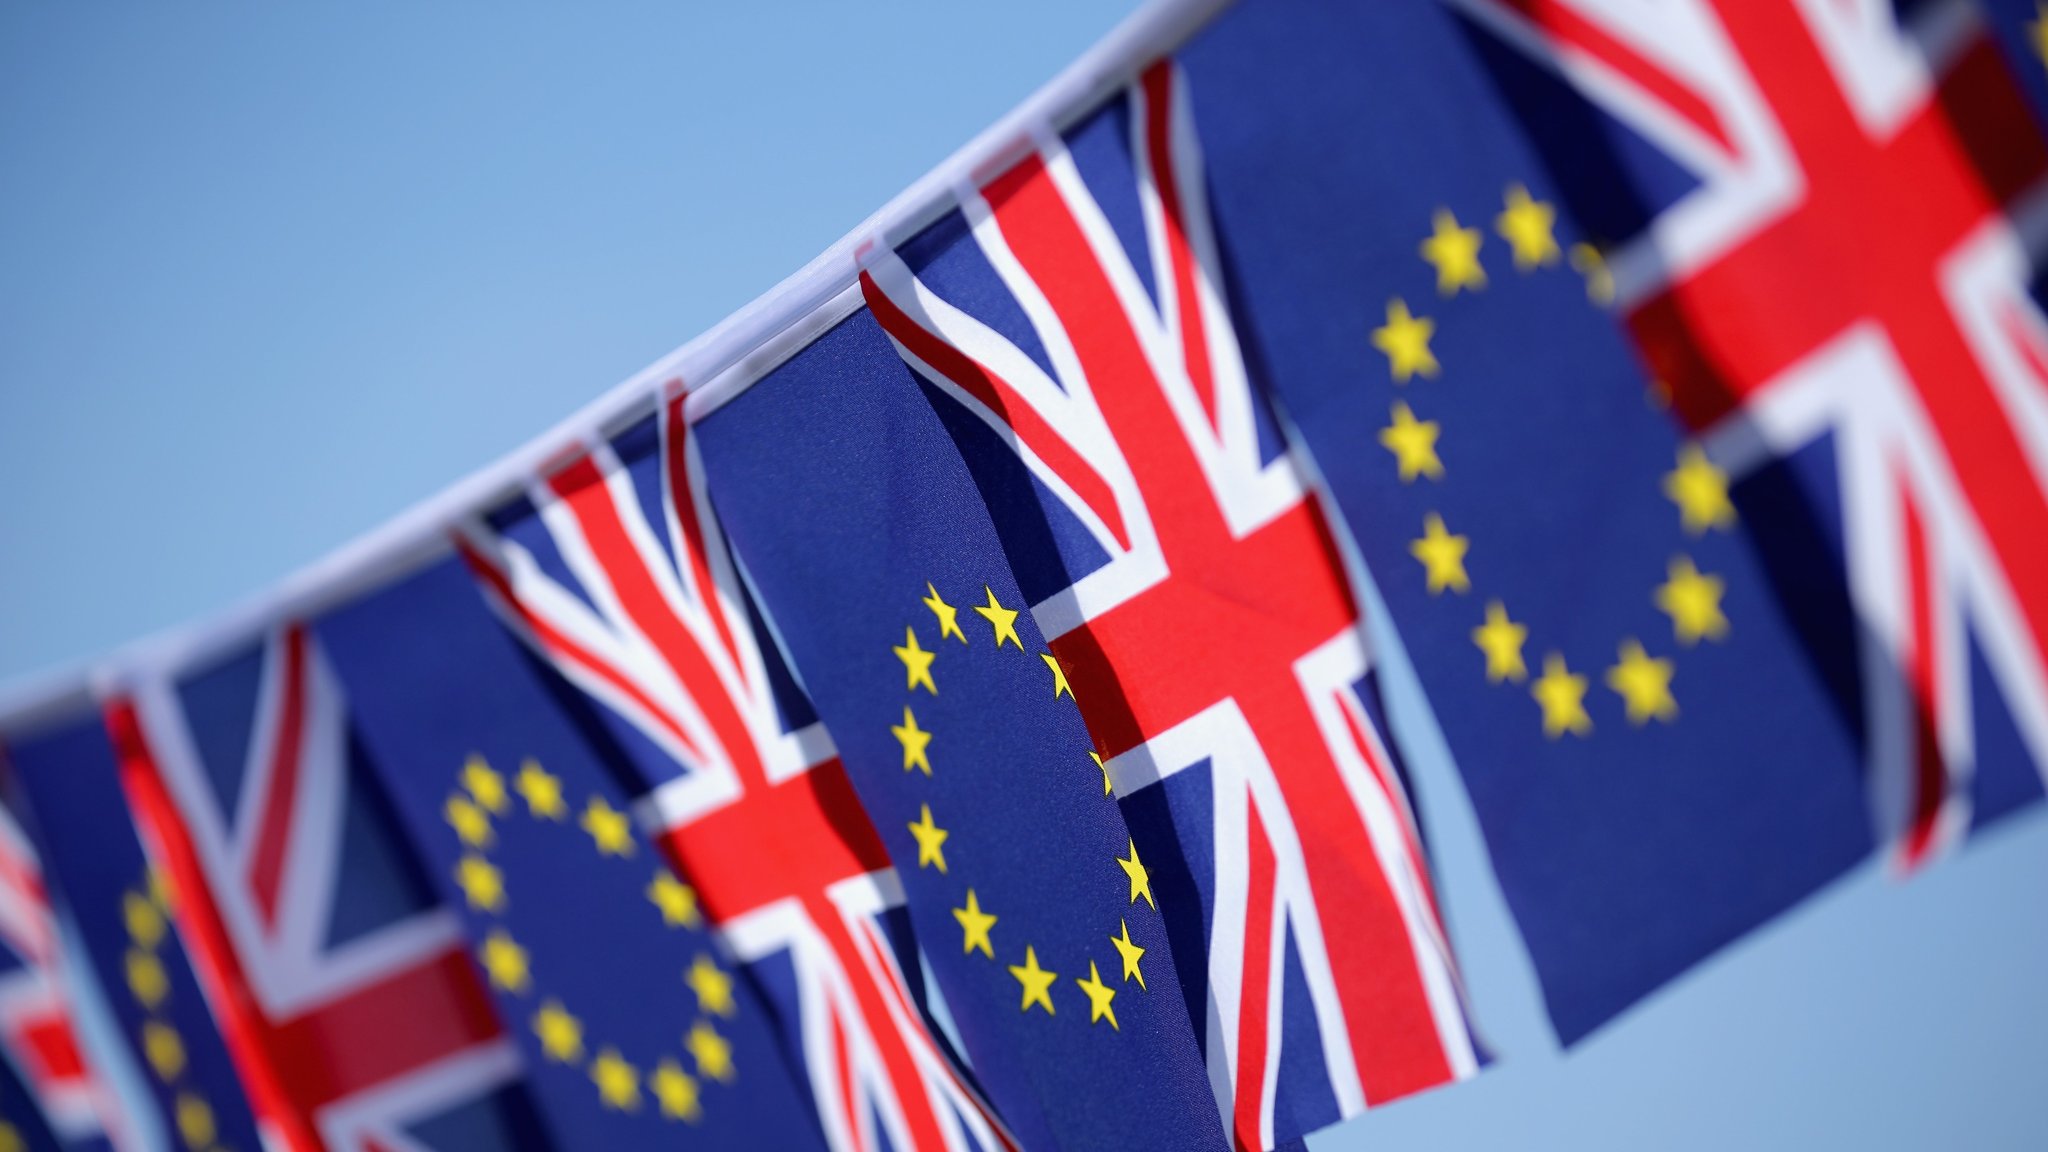 Say No To Brexit Huge 10 Metres EU Euro European Union Fabric Flags Bunting 